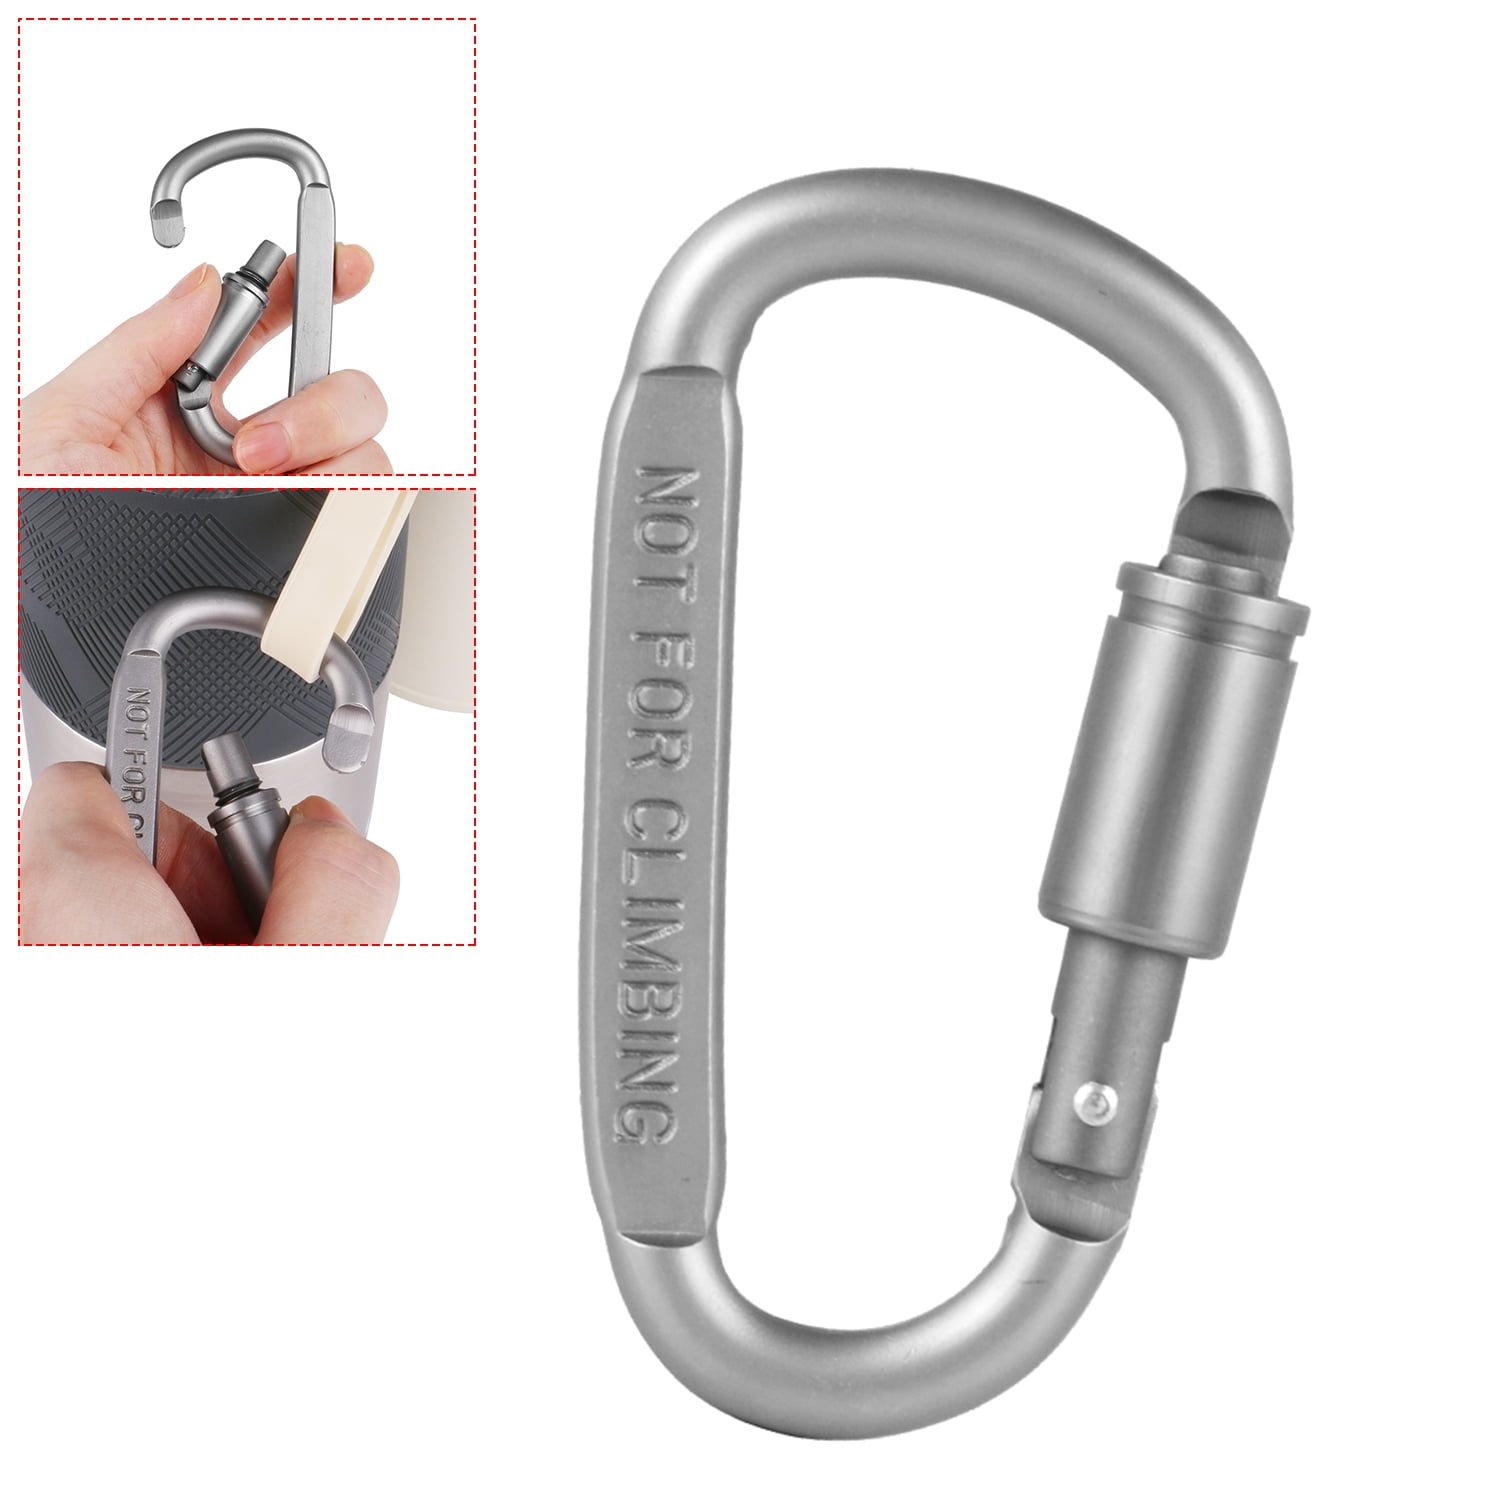 Locking Carabiner Clip Buckle Key Chain Hook Slidelock for Climbing Caving 